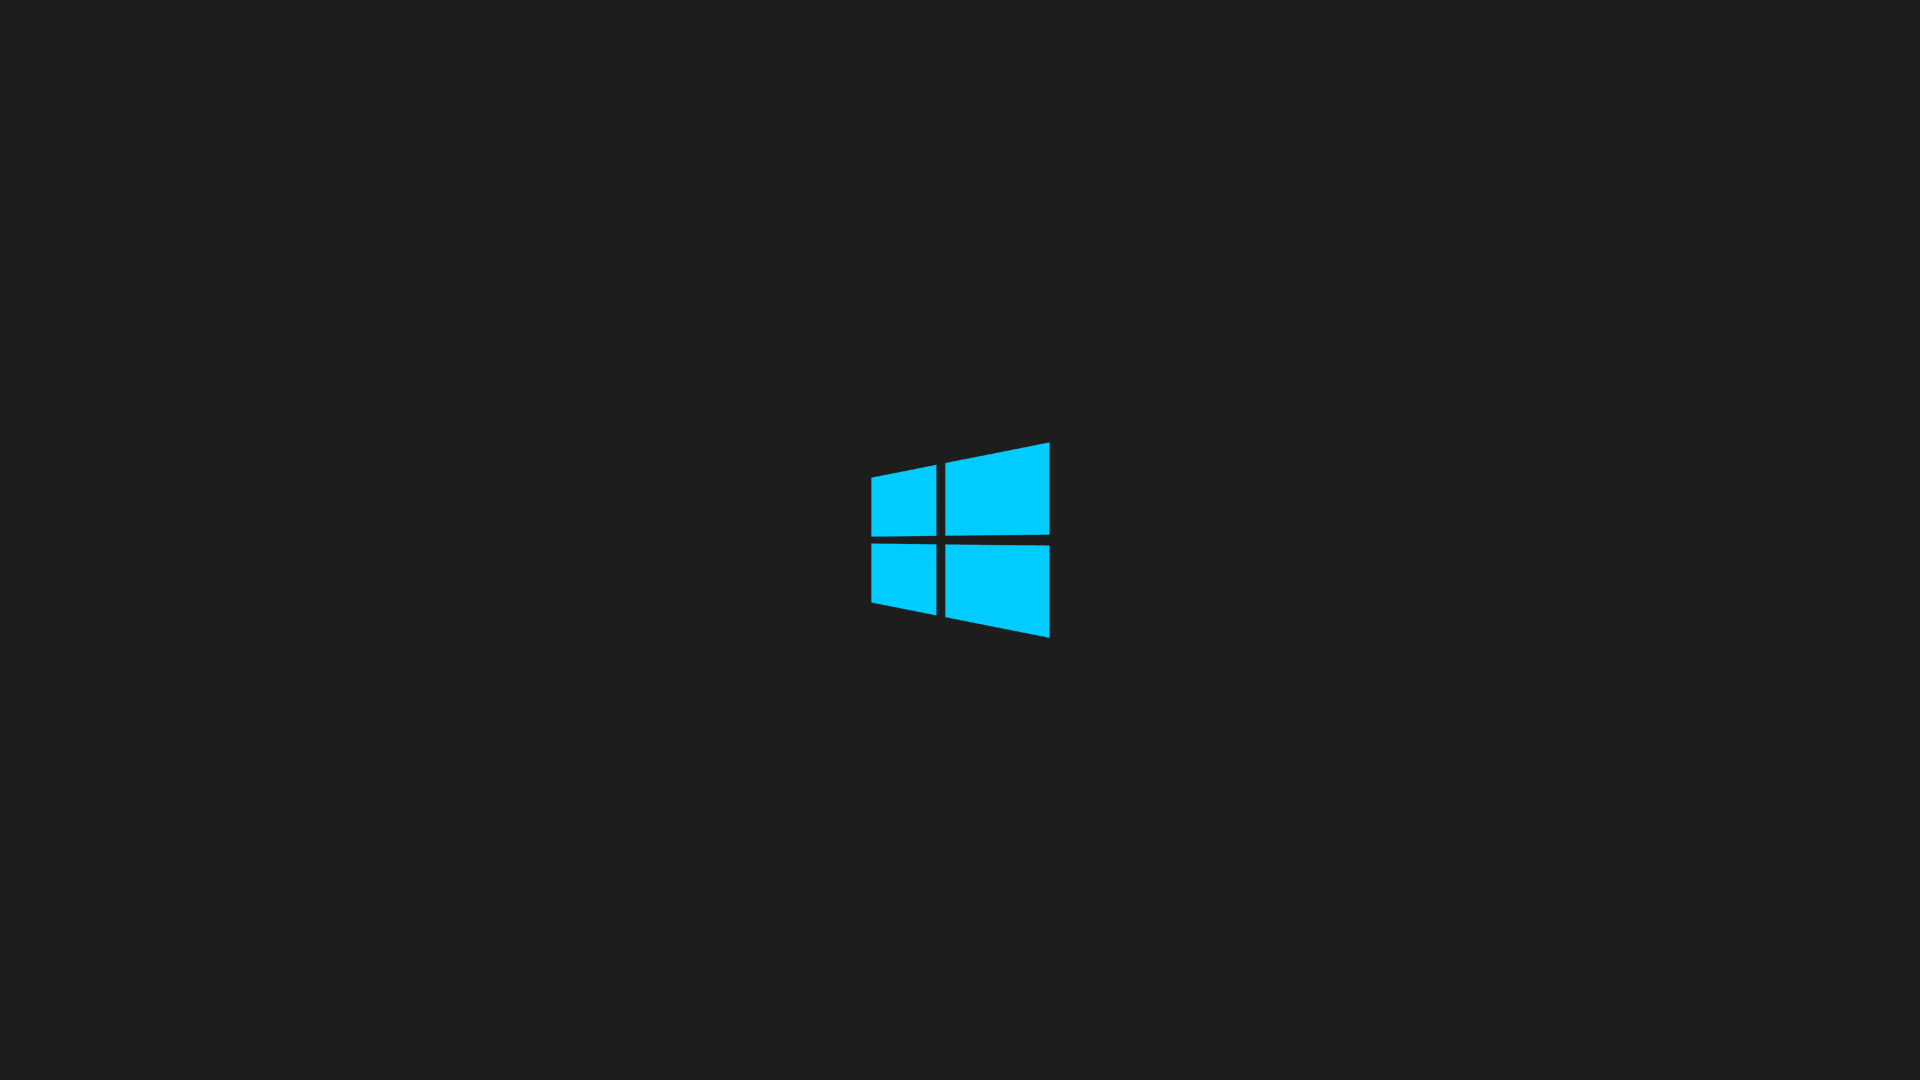  Windows Hintergrundbild 1920x1080. Black Windows 8 Wallpaper. Top HD Wallpaper. Windows wallpaper, Samsung wallpaper, Dark windows